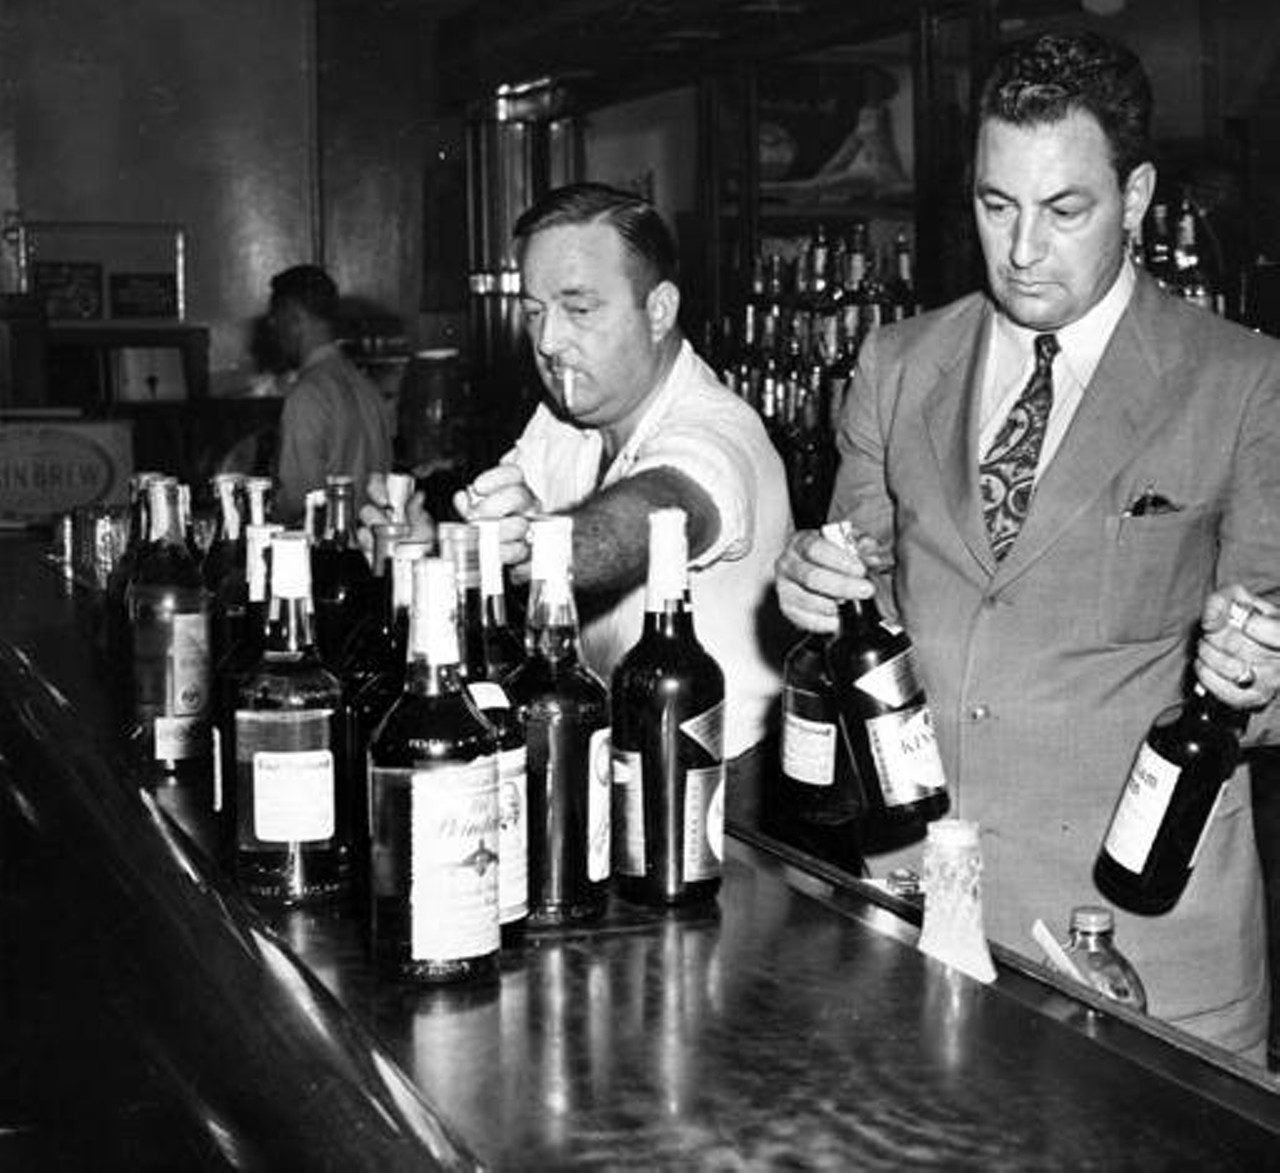 State Liquor Control agent close down Champion Cafe, 1949.